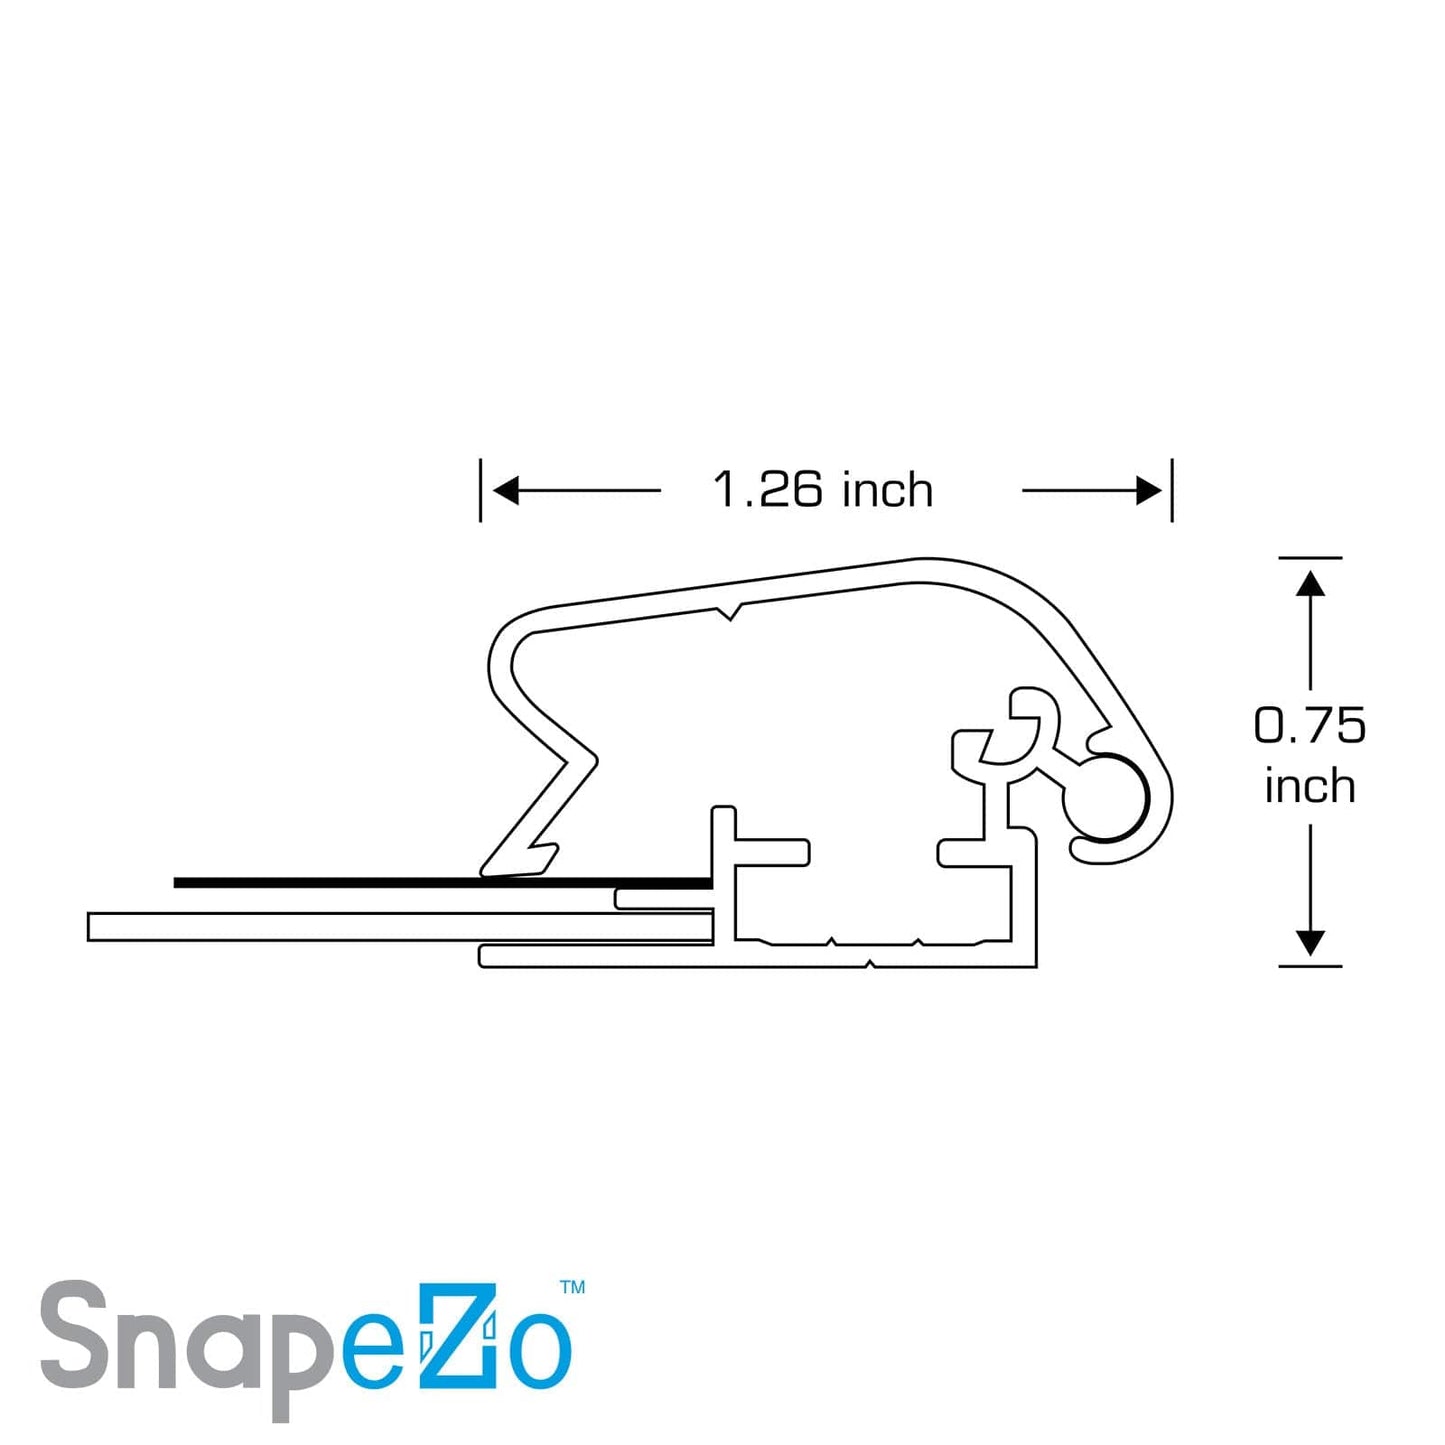 36x36 Black SnapeZo® Snap Frame - 1.25" Profile - Snap Frames Direct